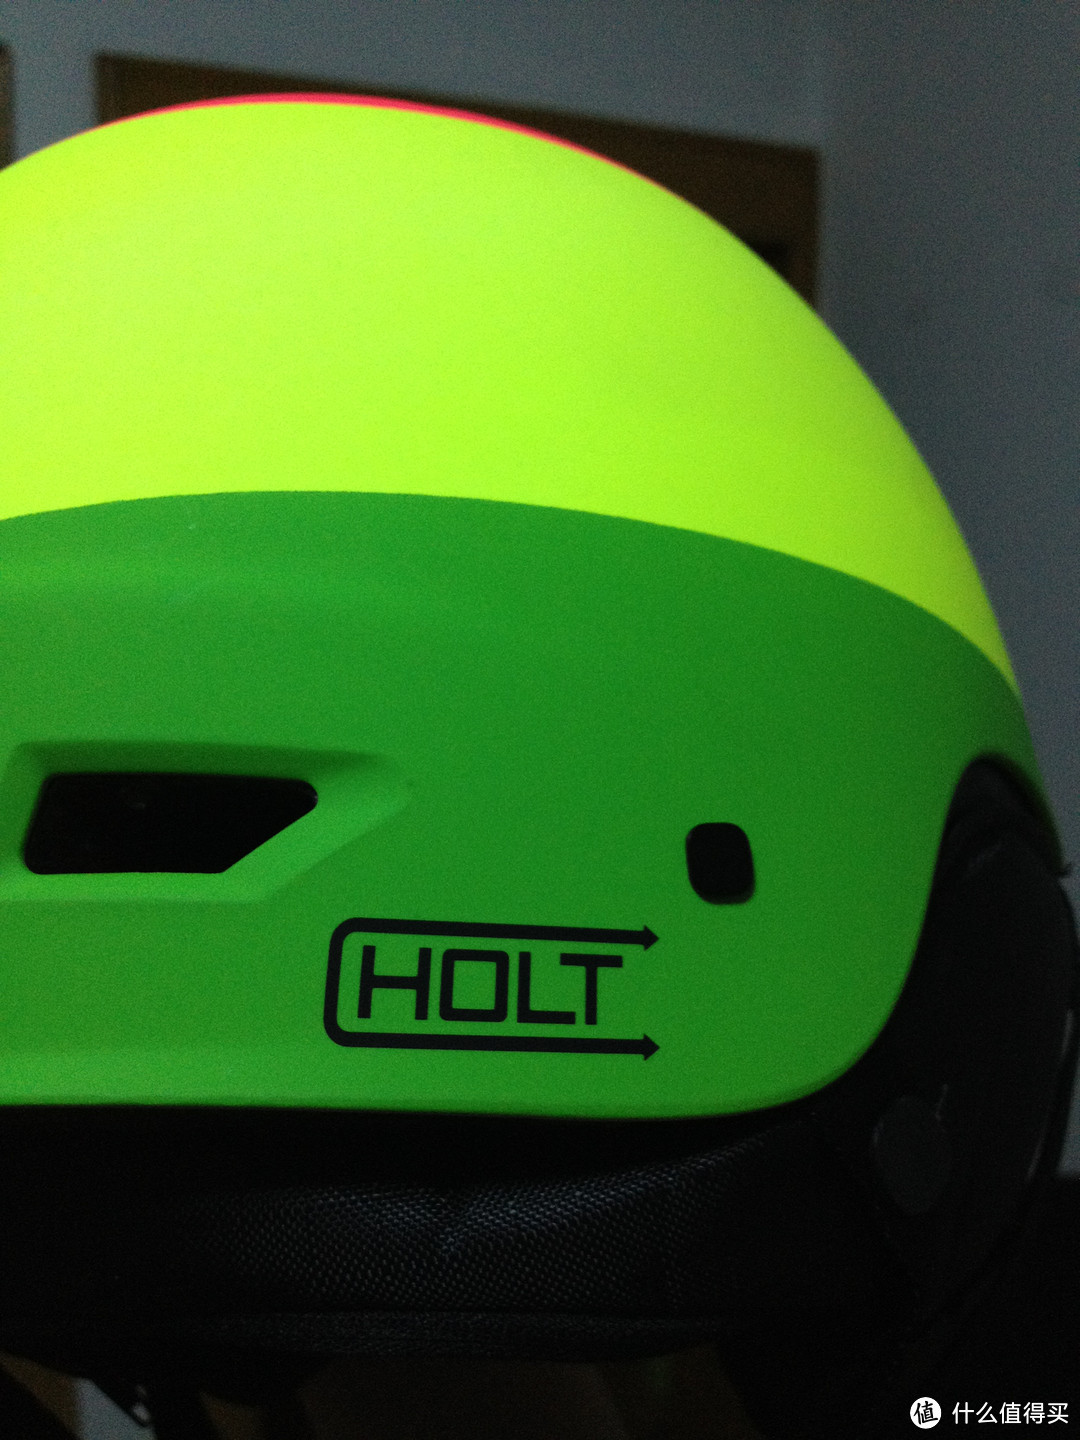 骚气滑雪头盔Smith Optics Unisex Adult Holt Snow Sports Helmet 海淘记